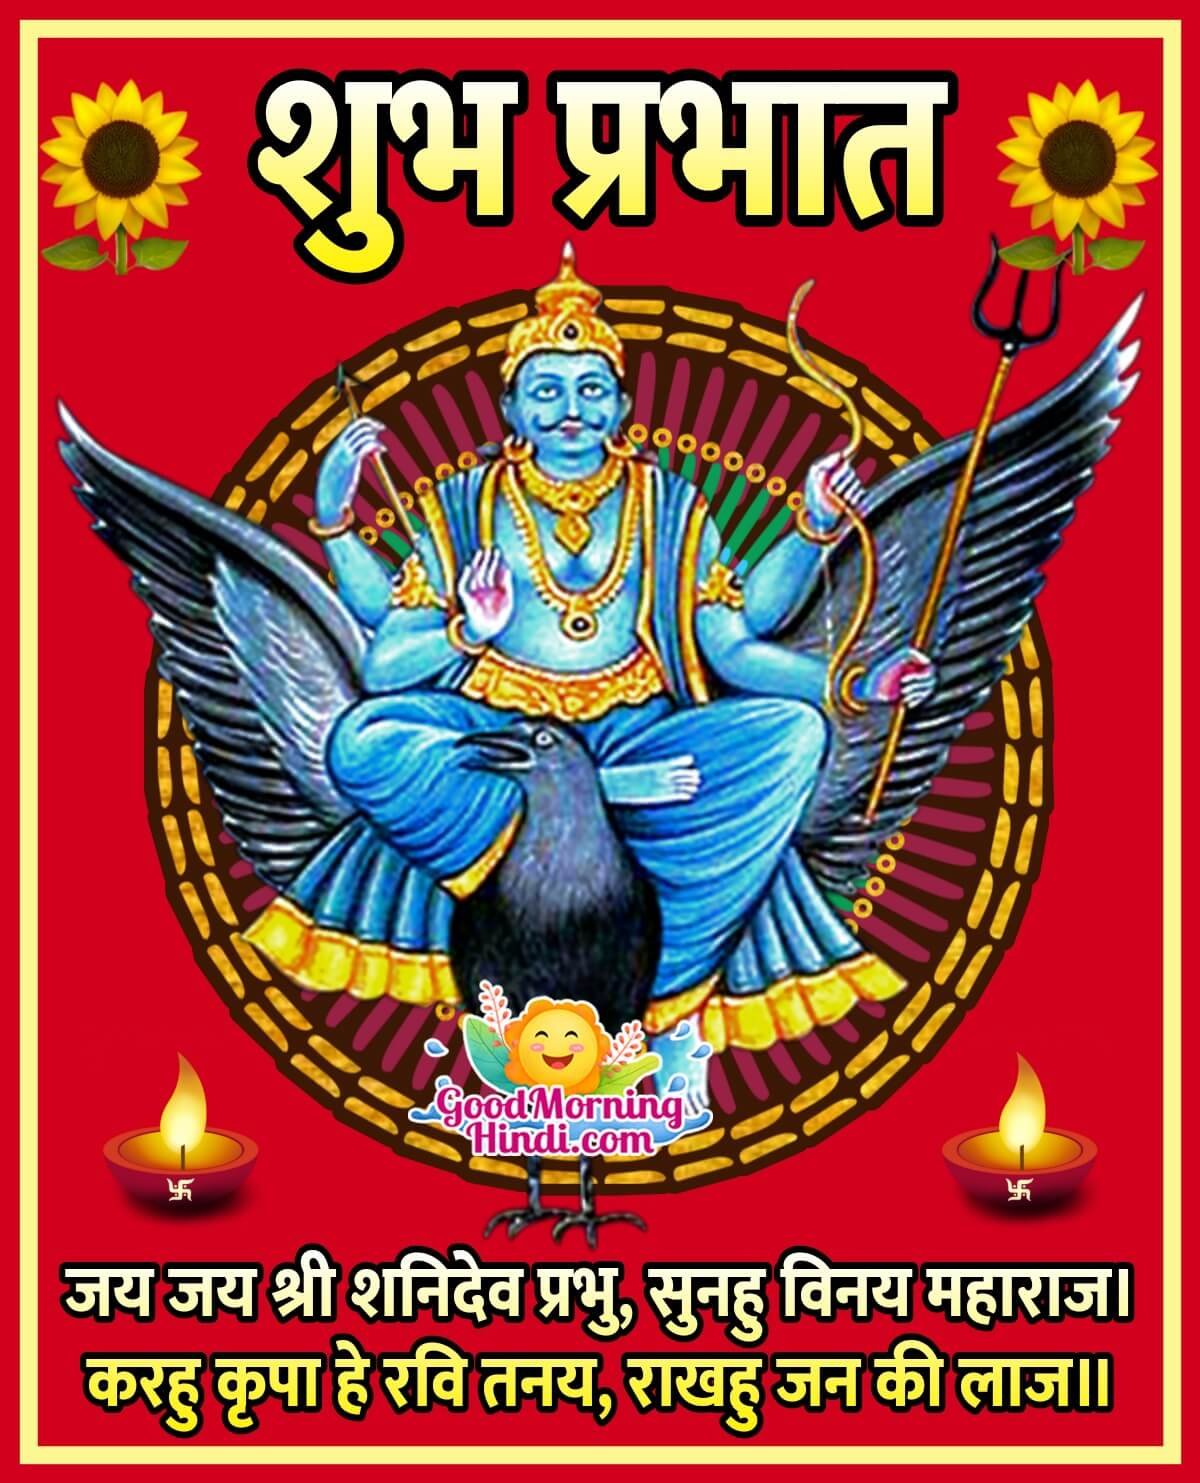 Good Morning Shanidev Images In Hindi Good Morning Wishes Images In Hindi